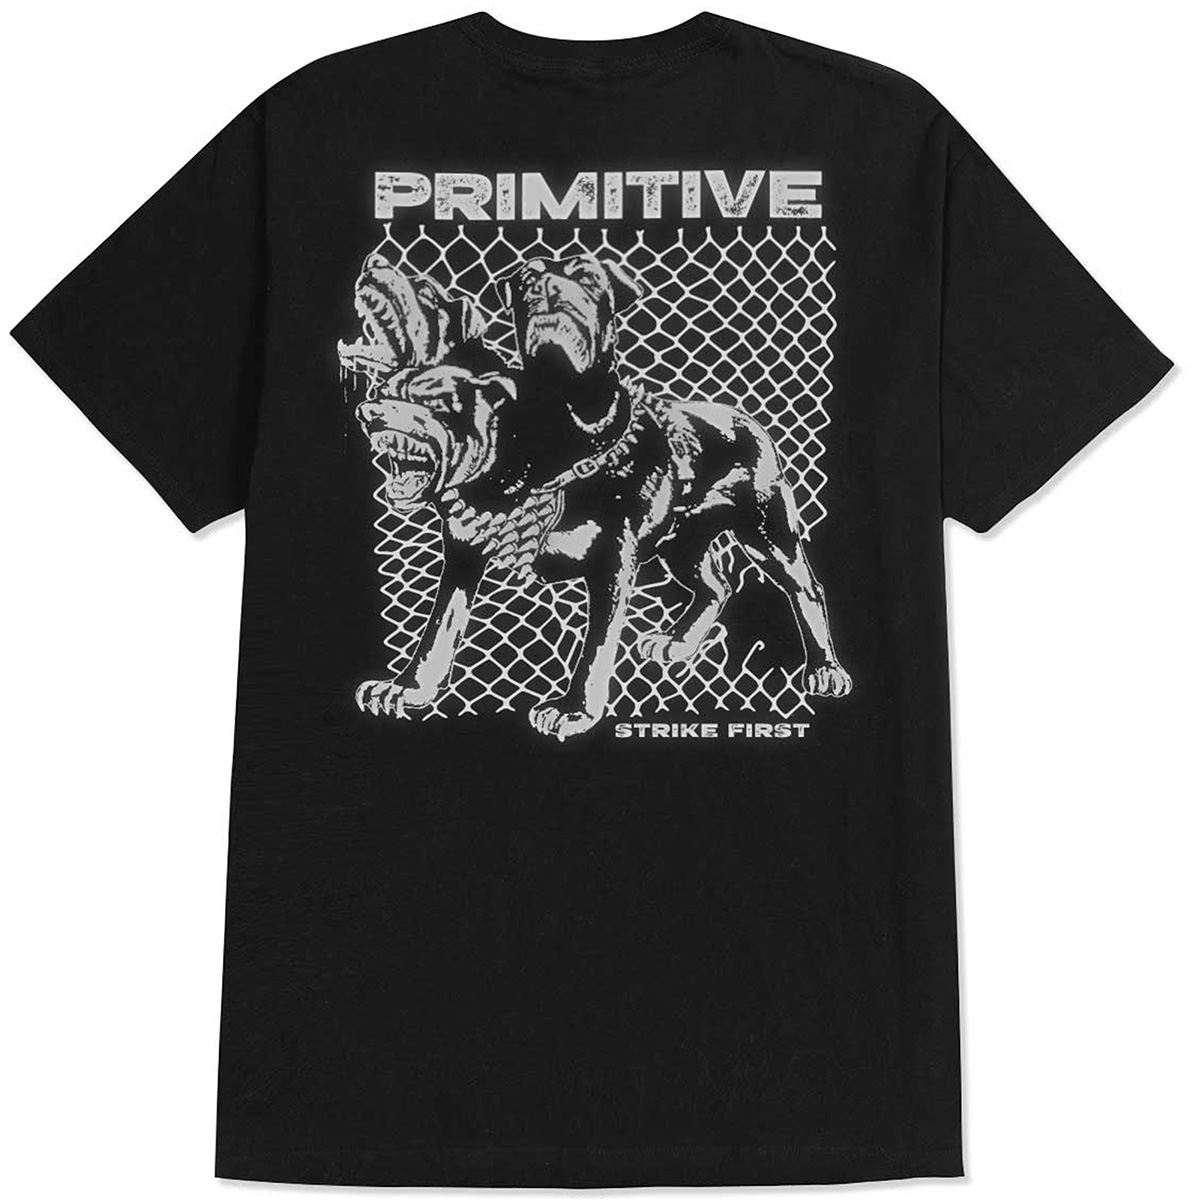 Primitive Warning T-Shirt Black